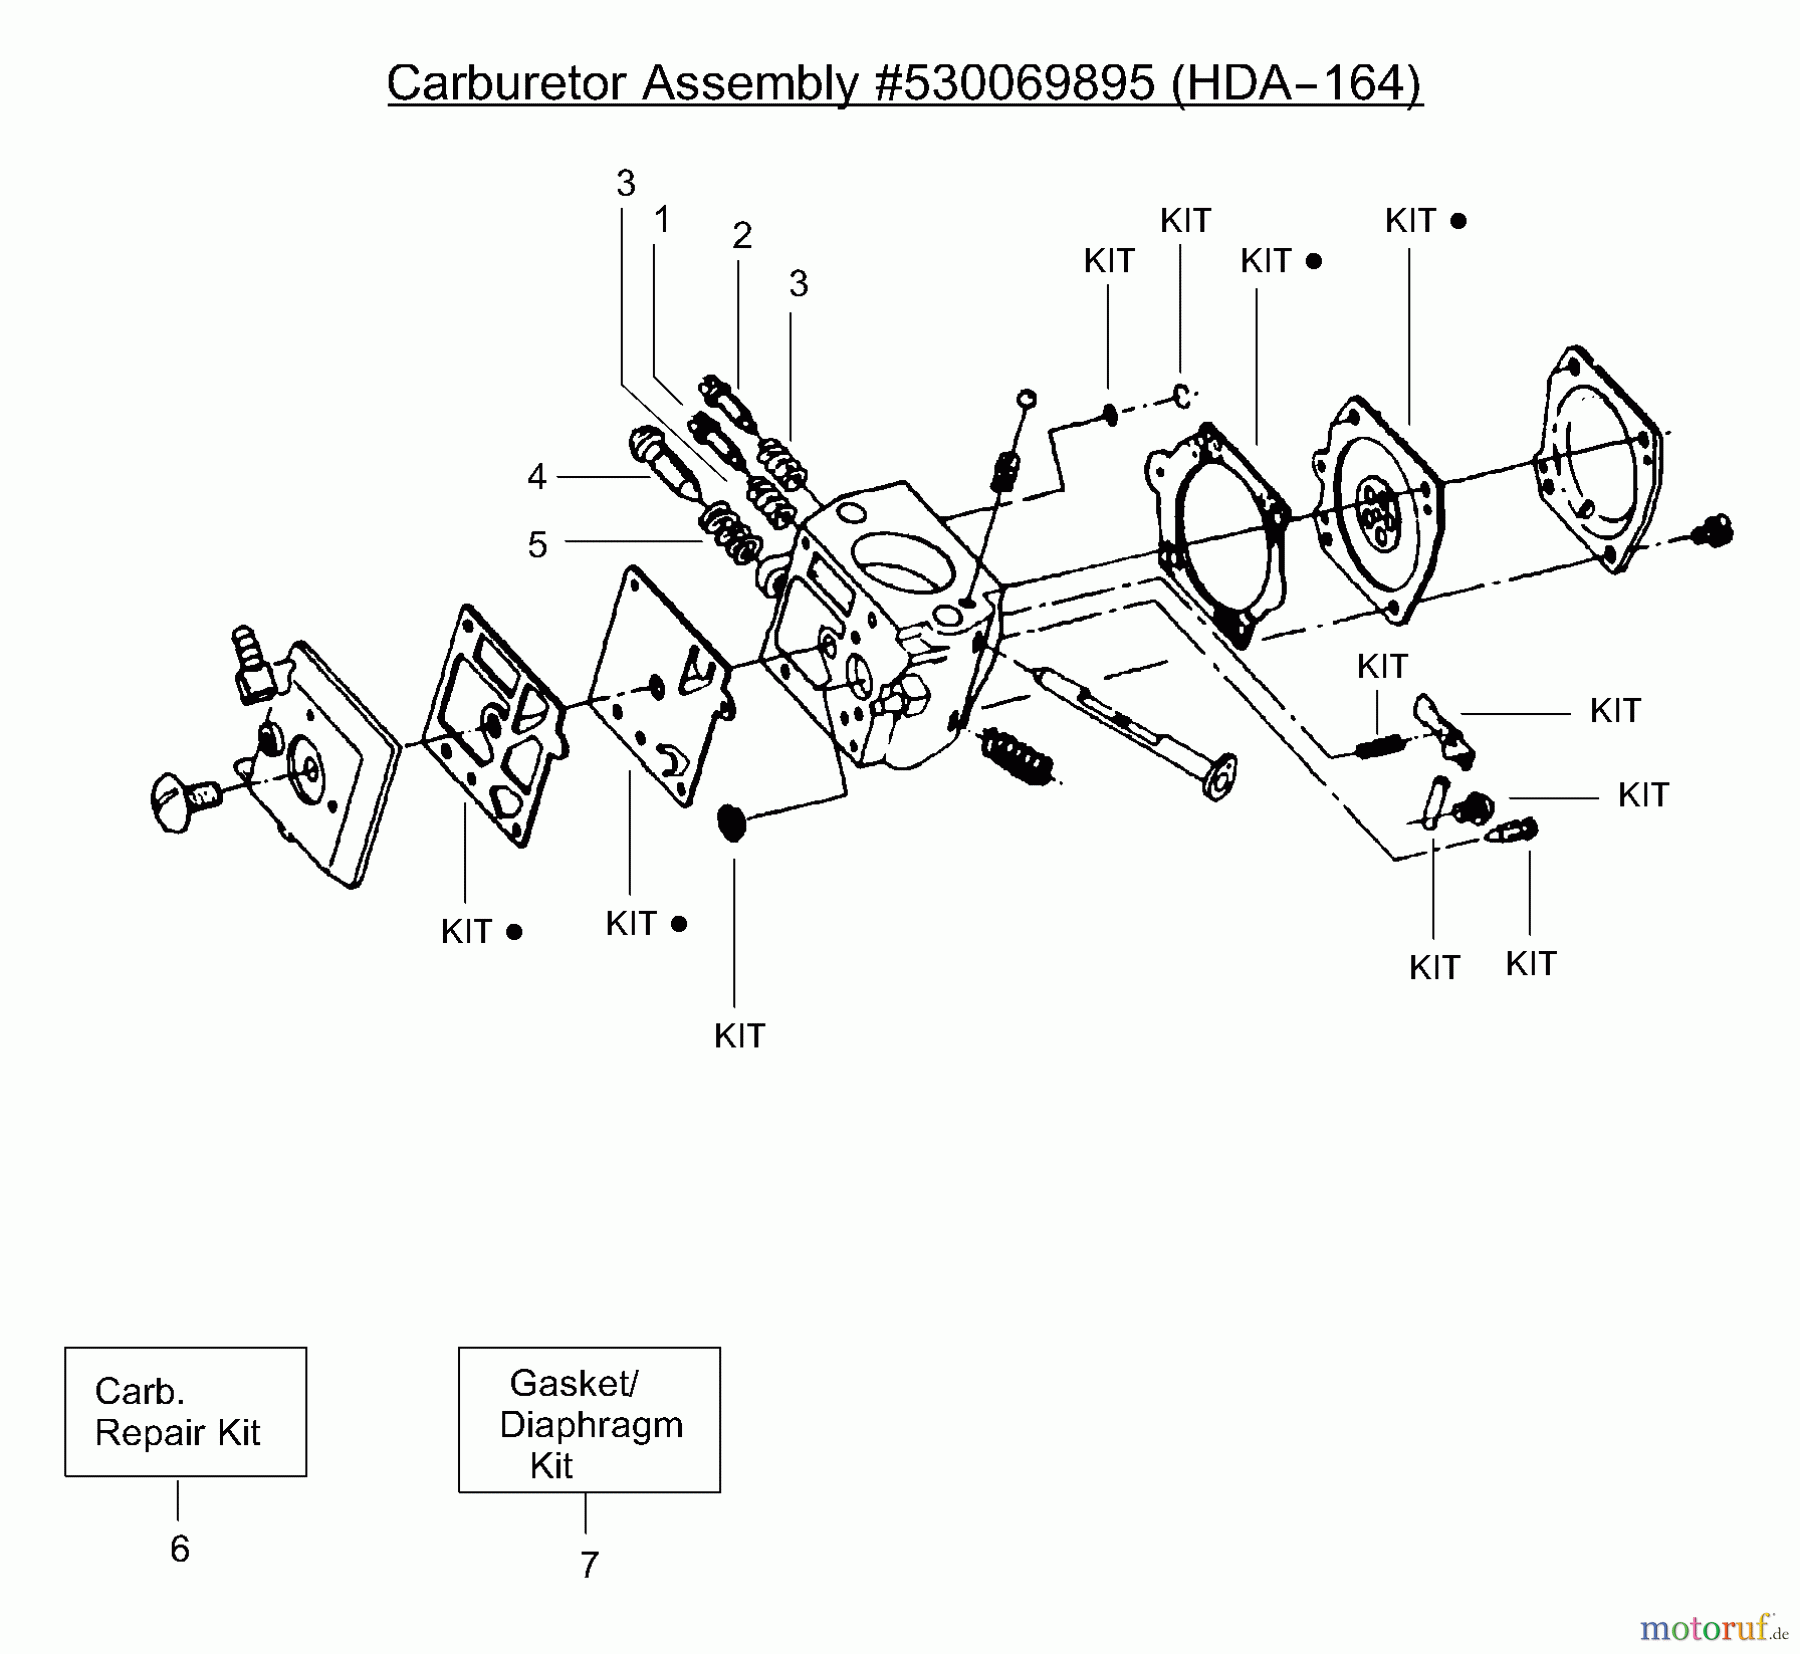  Poulan / Weed Eater Motorsägen 3750 (p219) - Poulan Chainsaw Carburetor Assembly (HDA164) 530069895